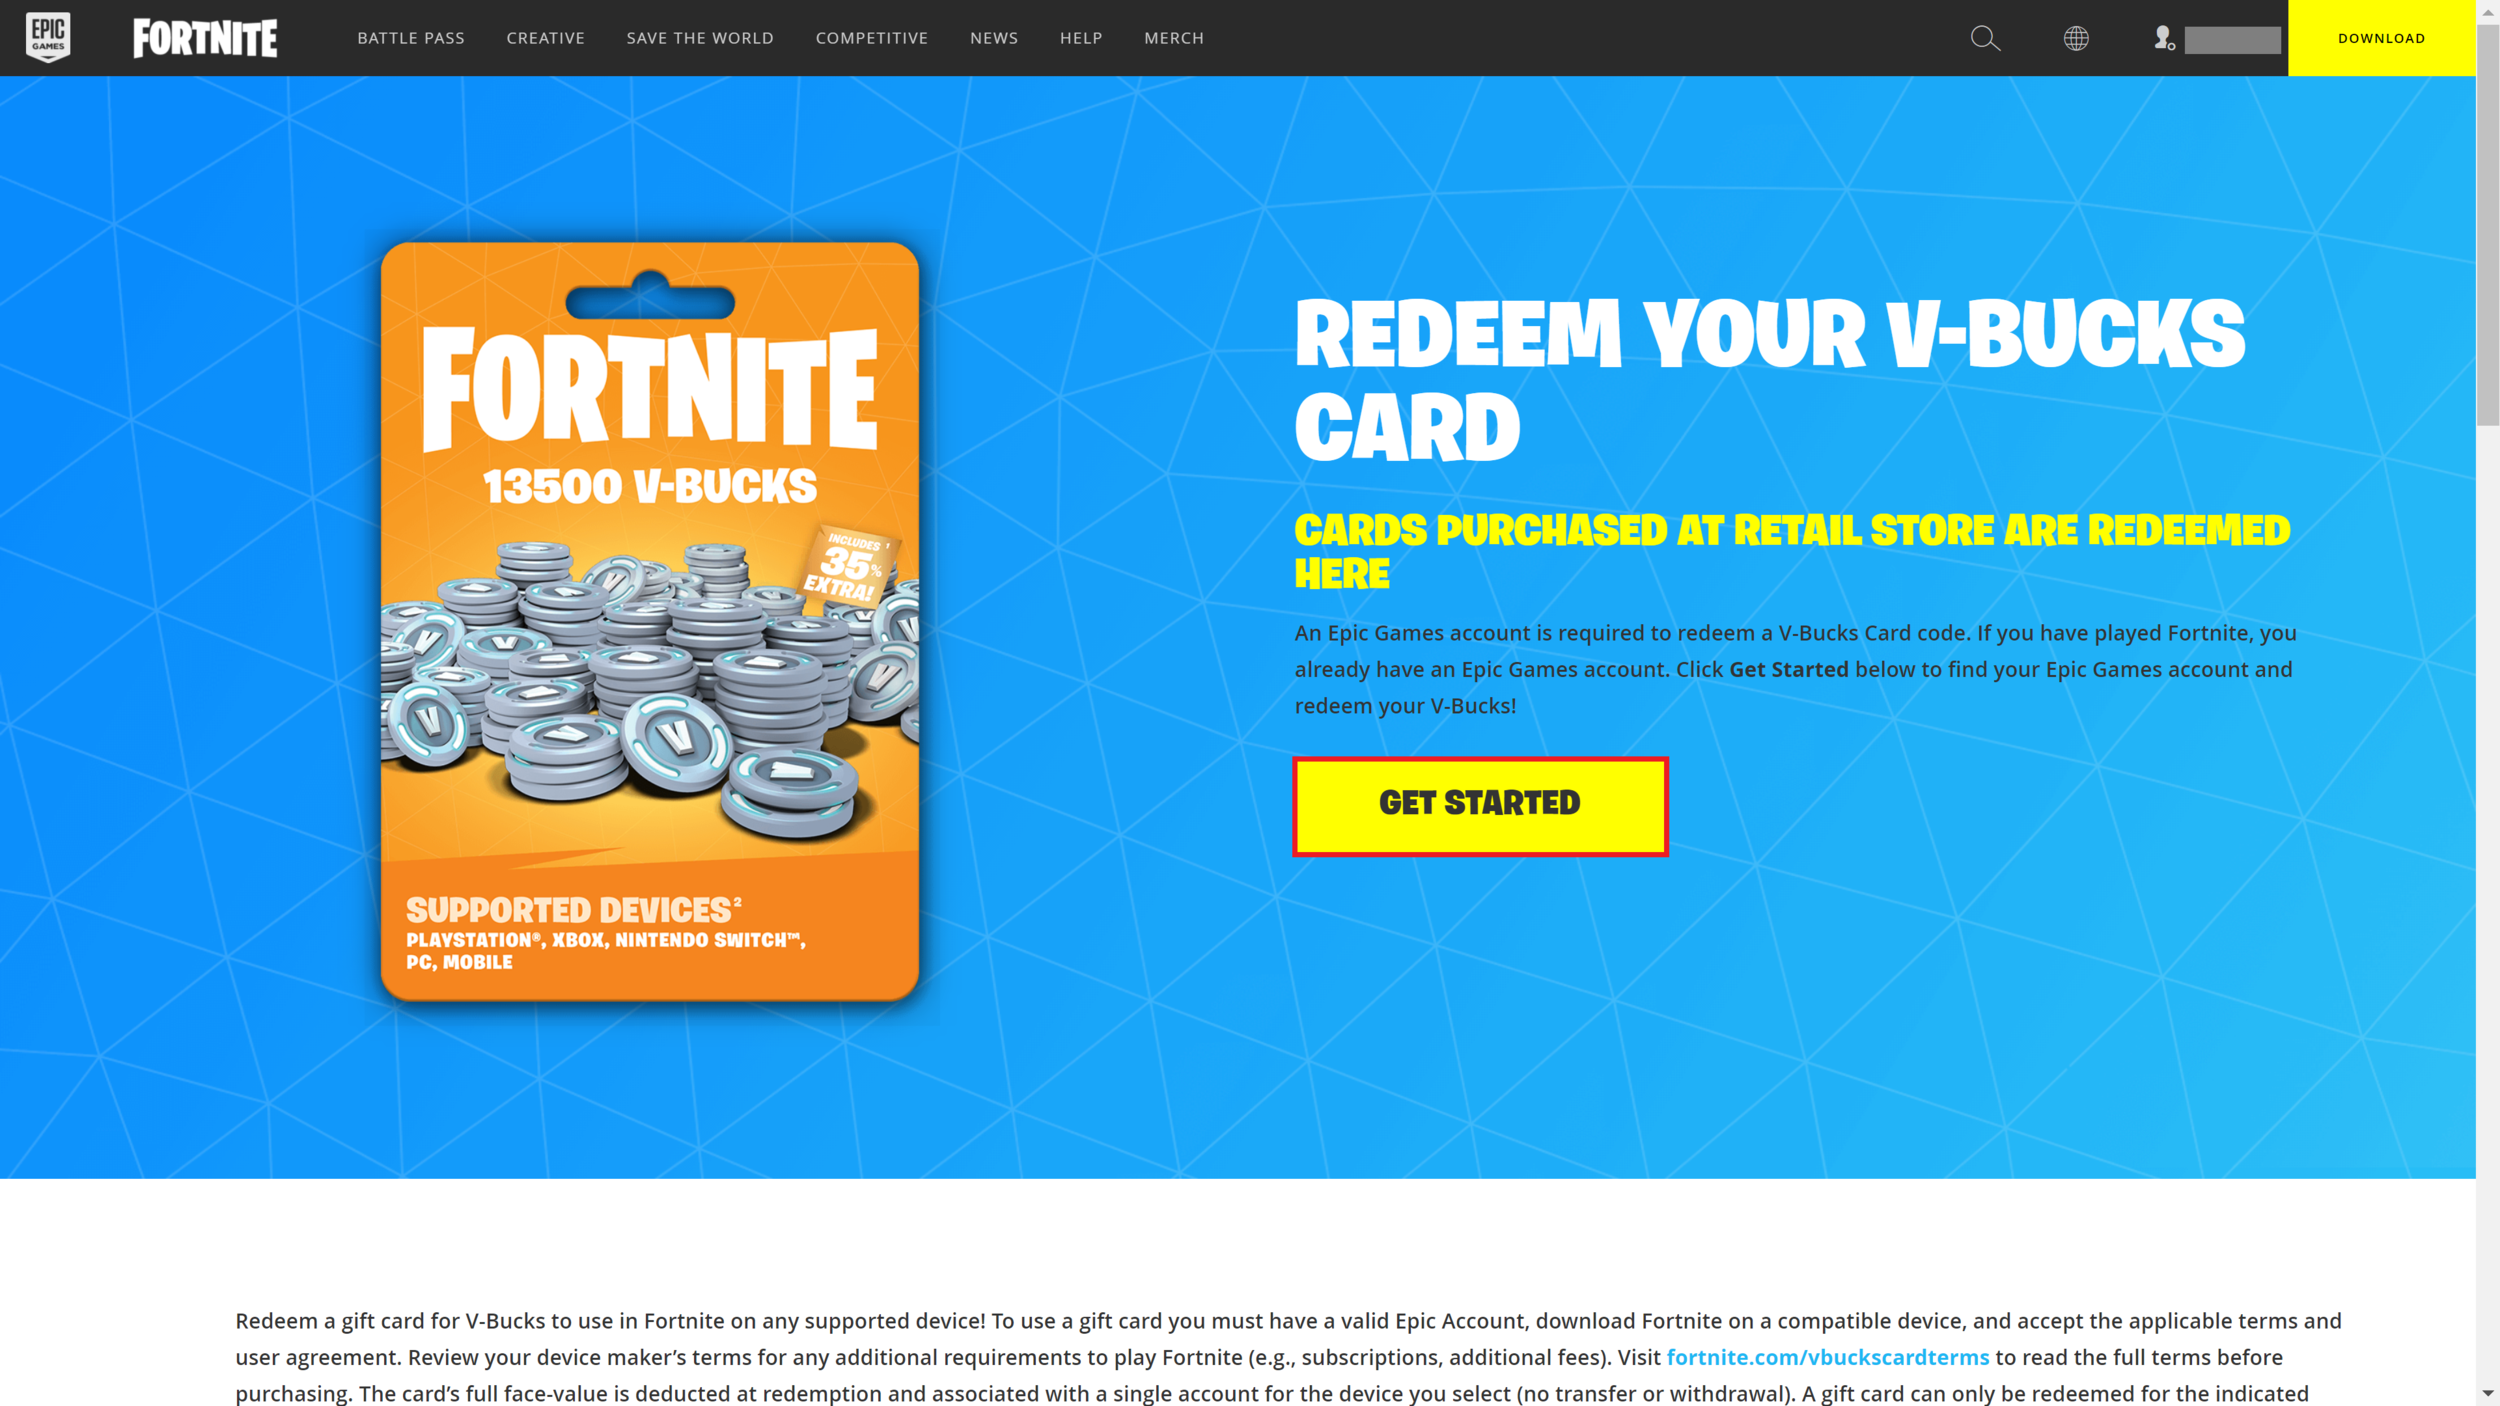 How To Redeem Fortnite Vbucks Gift Card On Xbox Max Dalton Tutorials